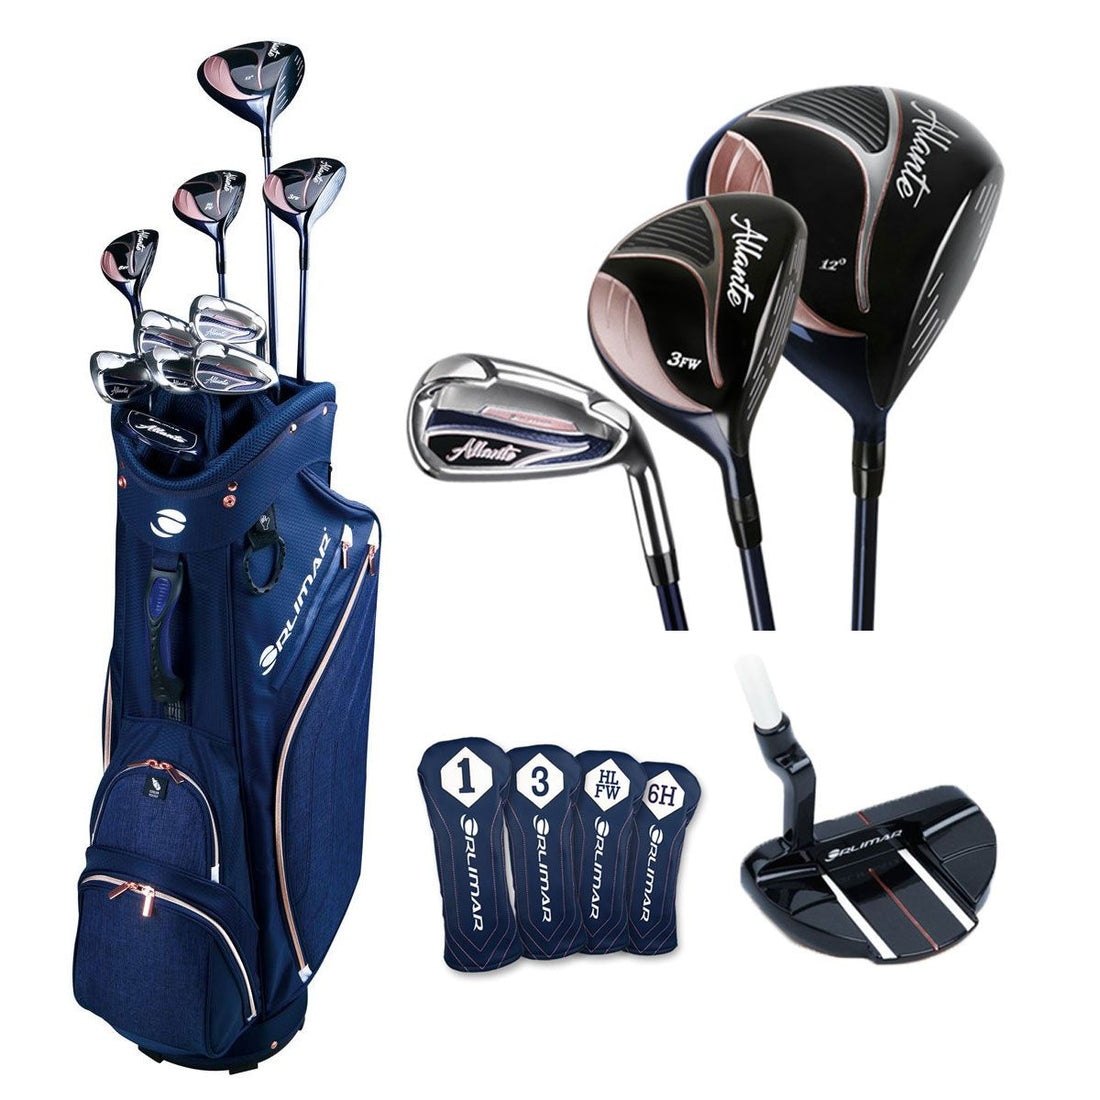 Orlimar Allante Ladies blue golf cart bag with 10 golf clubs, Orlimar Allante iron, 